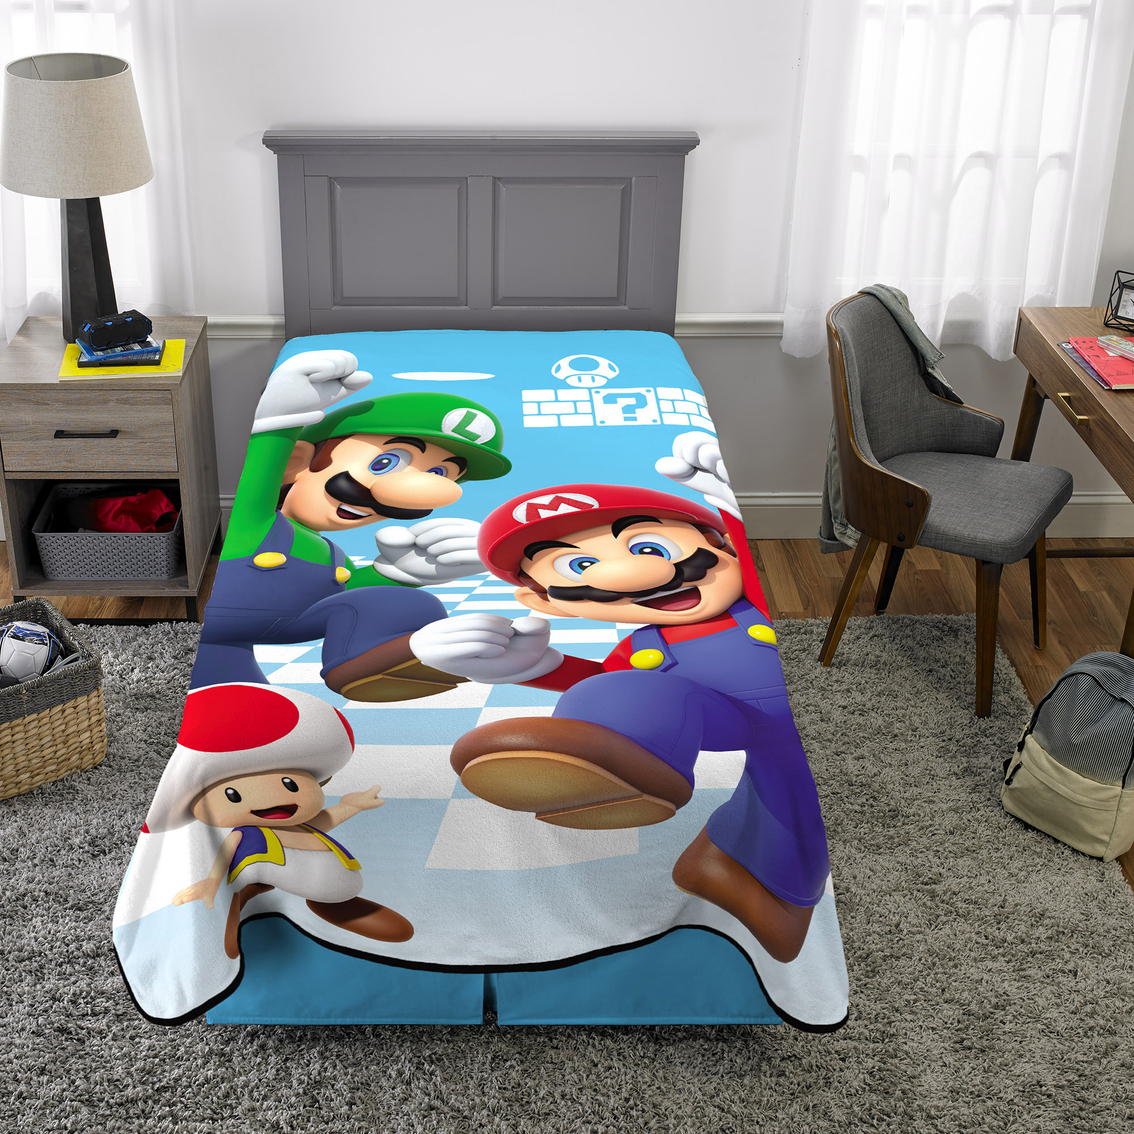 Nintendo  Super Mario Game Kings Blanket - Image 2 of 2